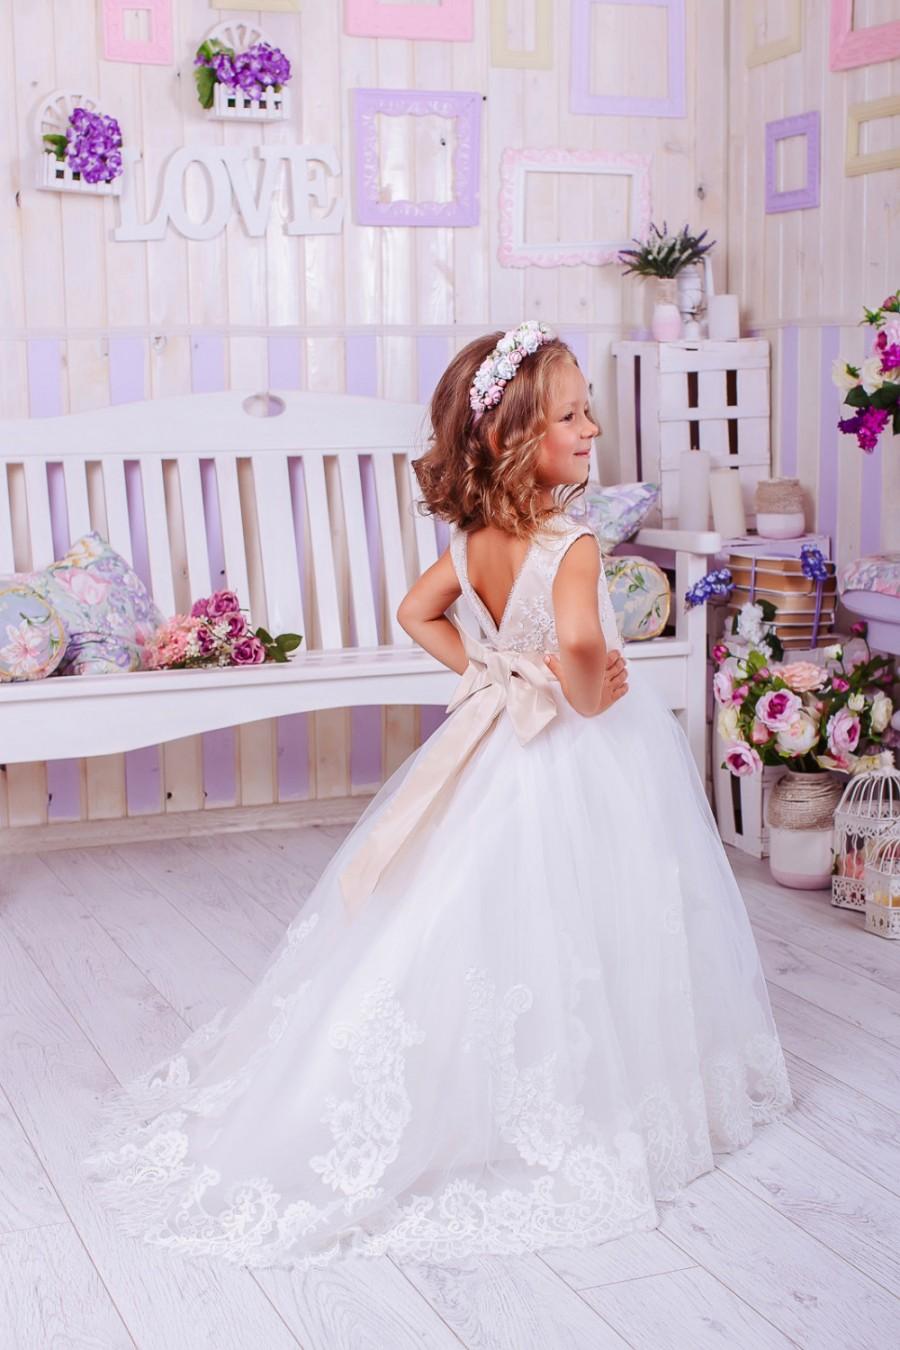 Wedding - Ivory Lace Flower Girl Dress,Flower Girl Dress,Wedding Party Dress,Baby Dress, Rustic Girl Dress,White Girls Dresses,Tulle Lace Flower Girl